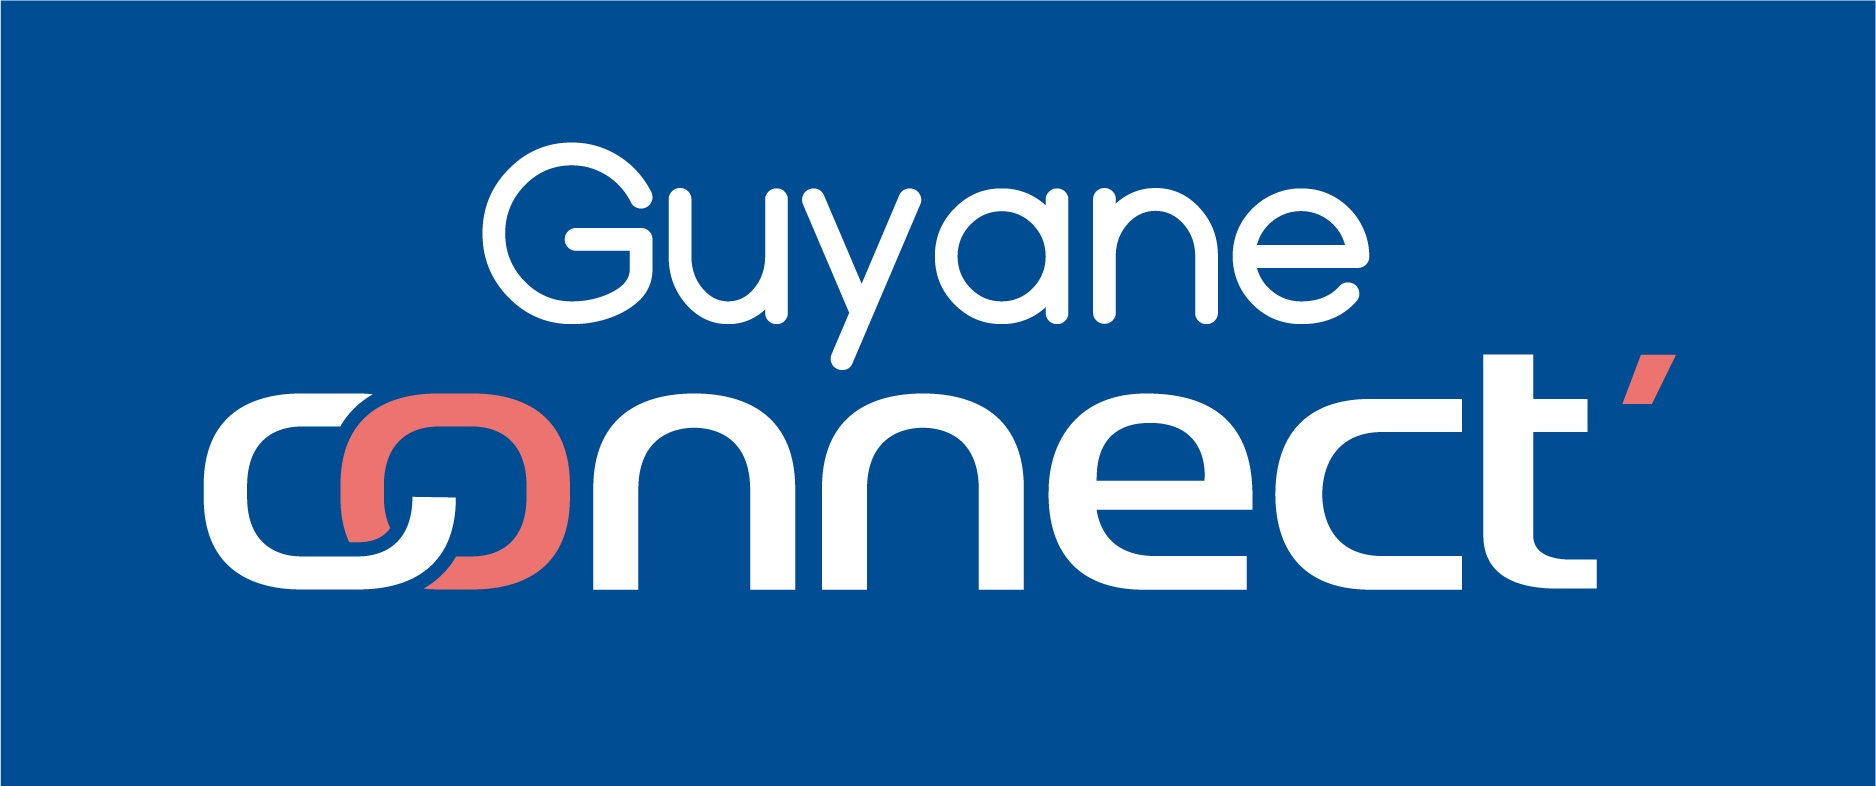 logo-guyane-connect-2-fond-bleu.jpg